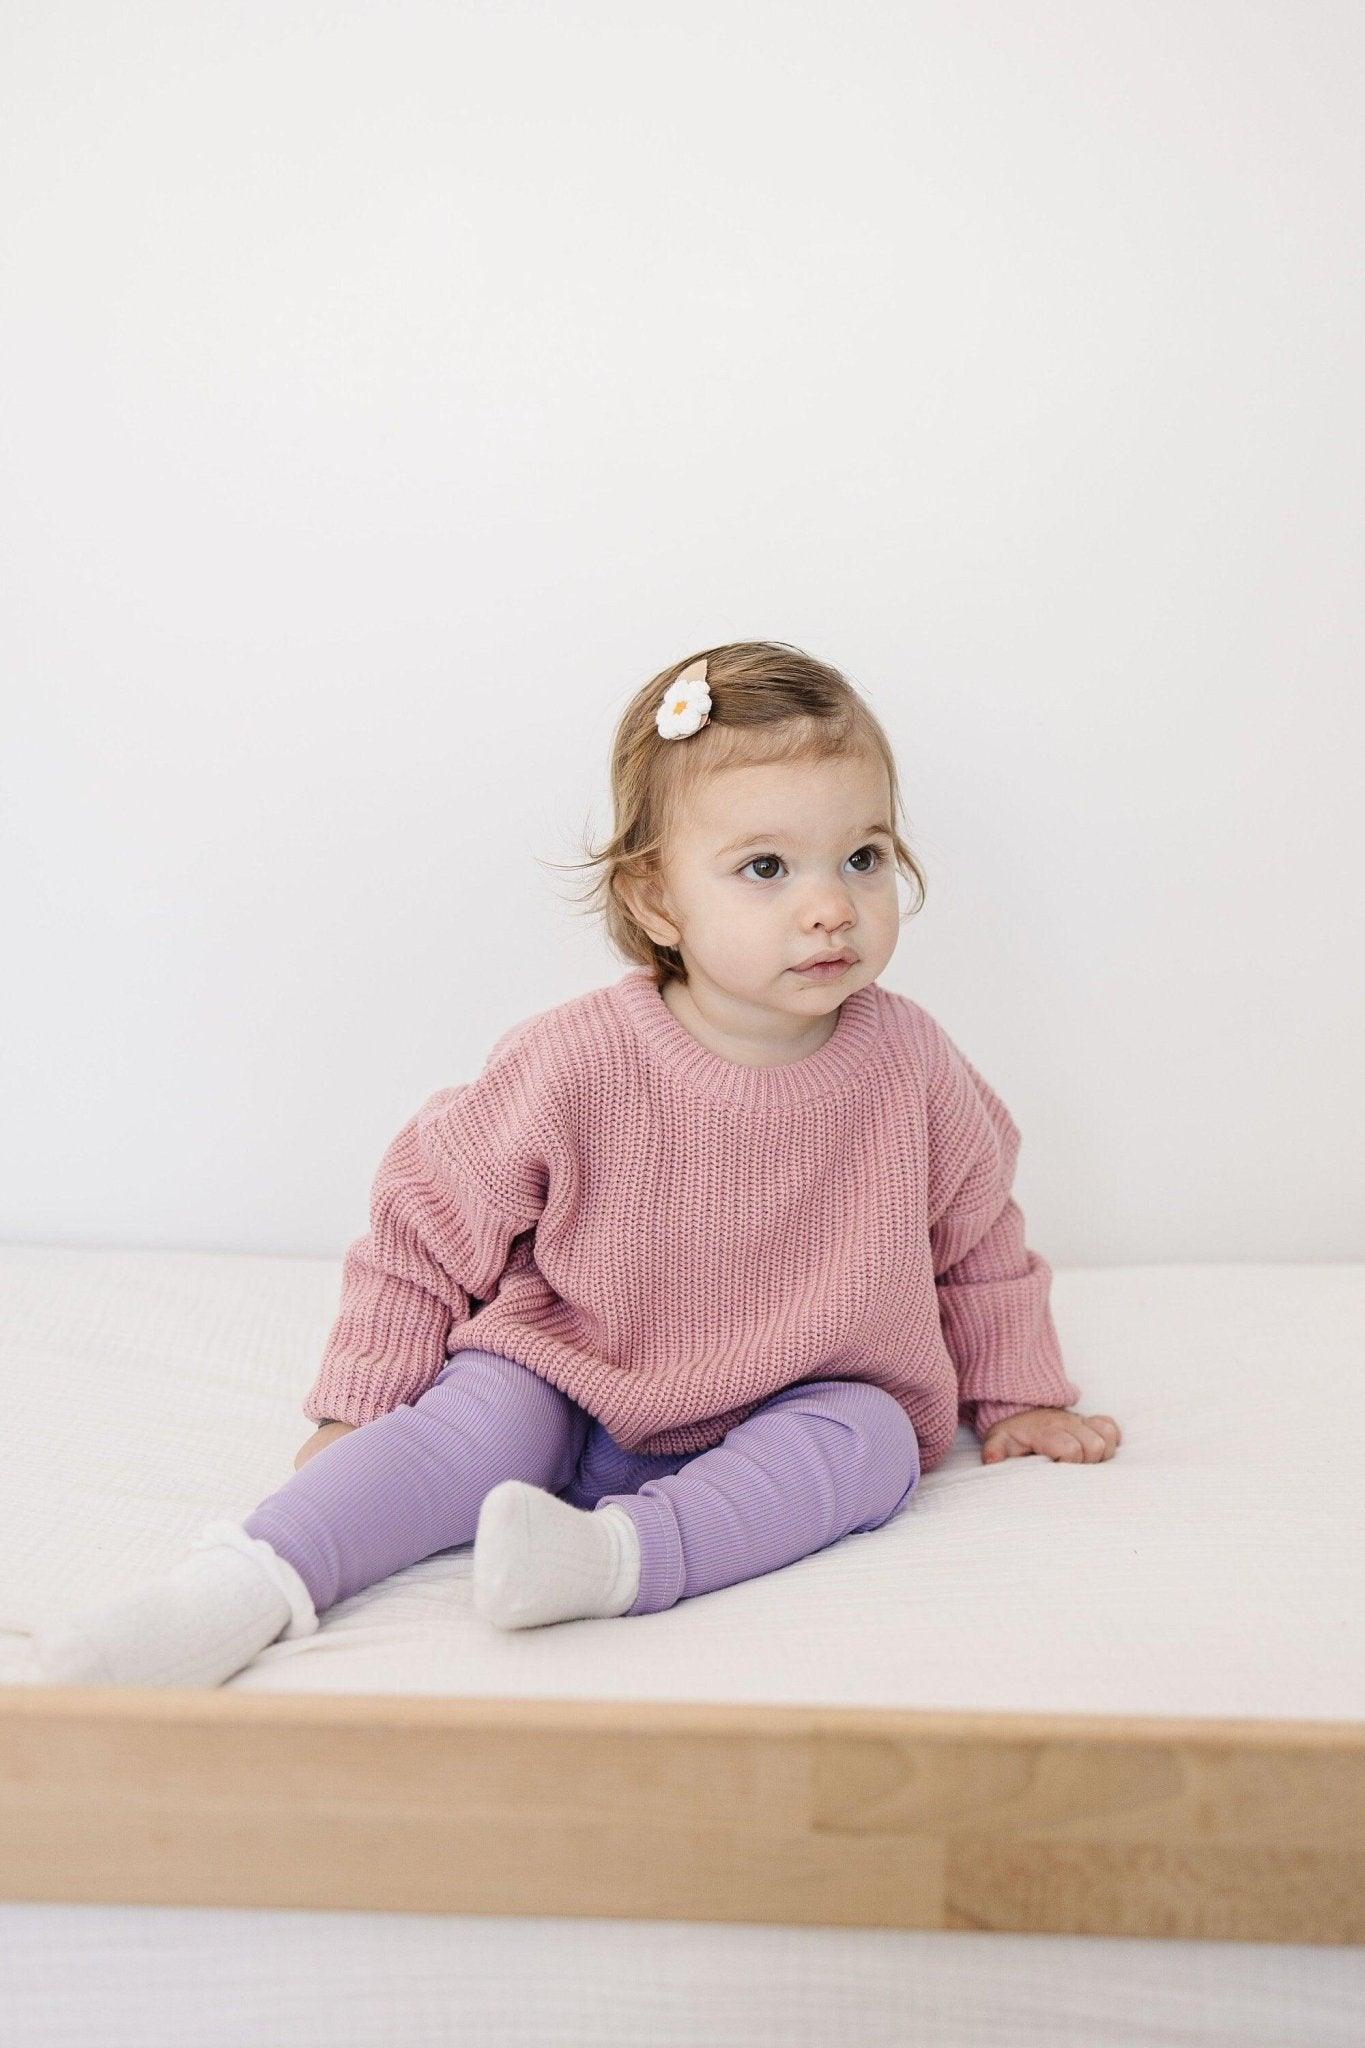 Pink Chunky Knit Sweater - Little Joy Co.